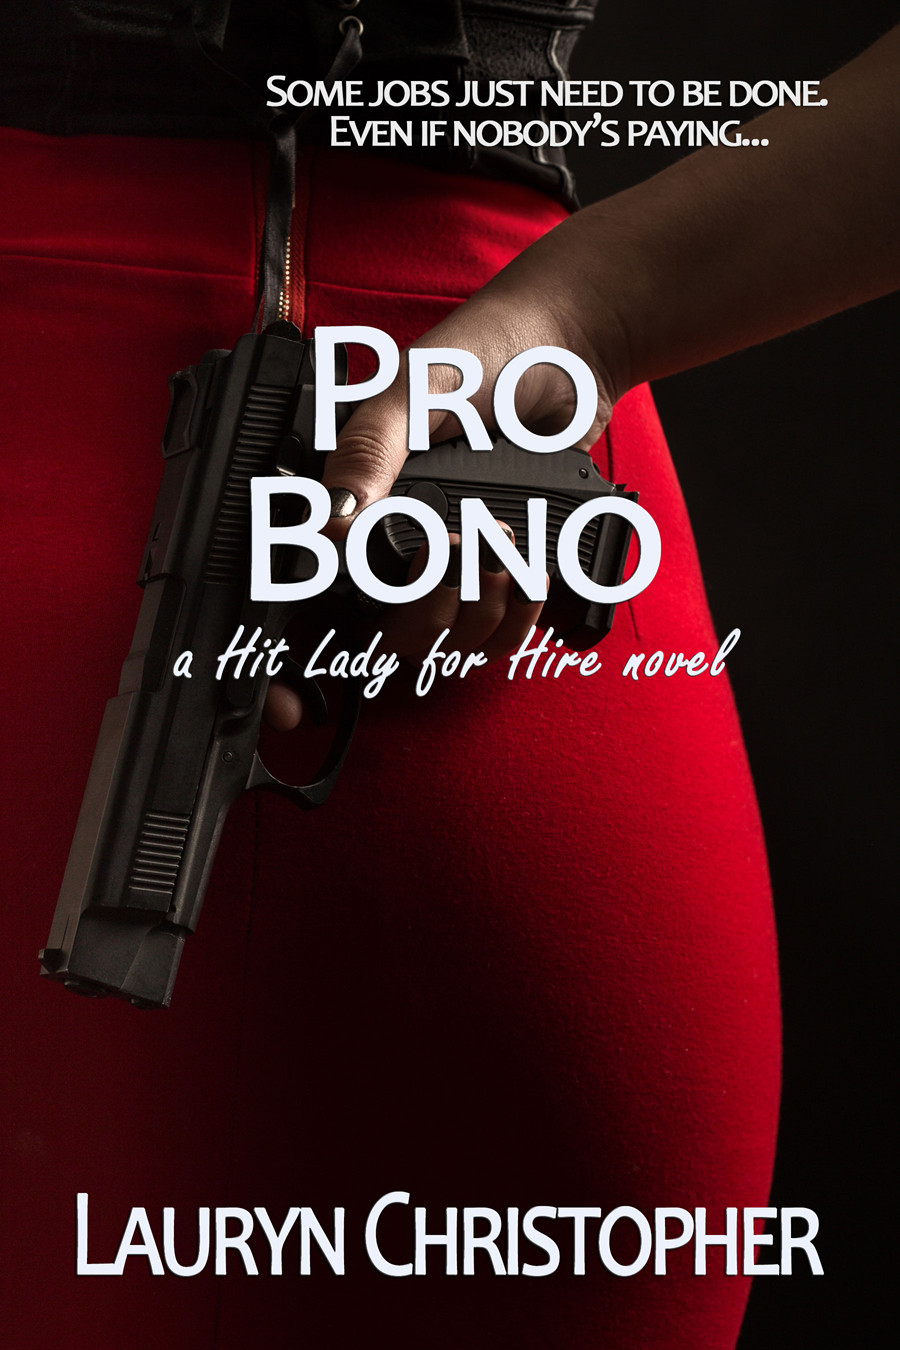 Pro Bono, a novel by Lauryn Christopher